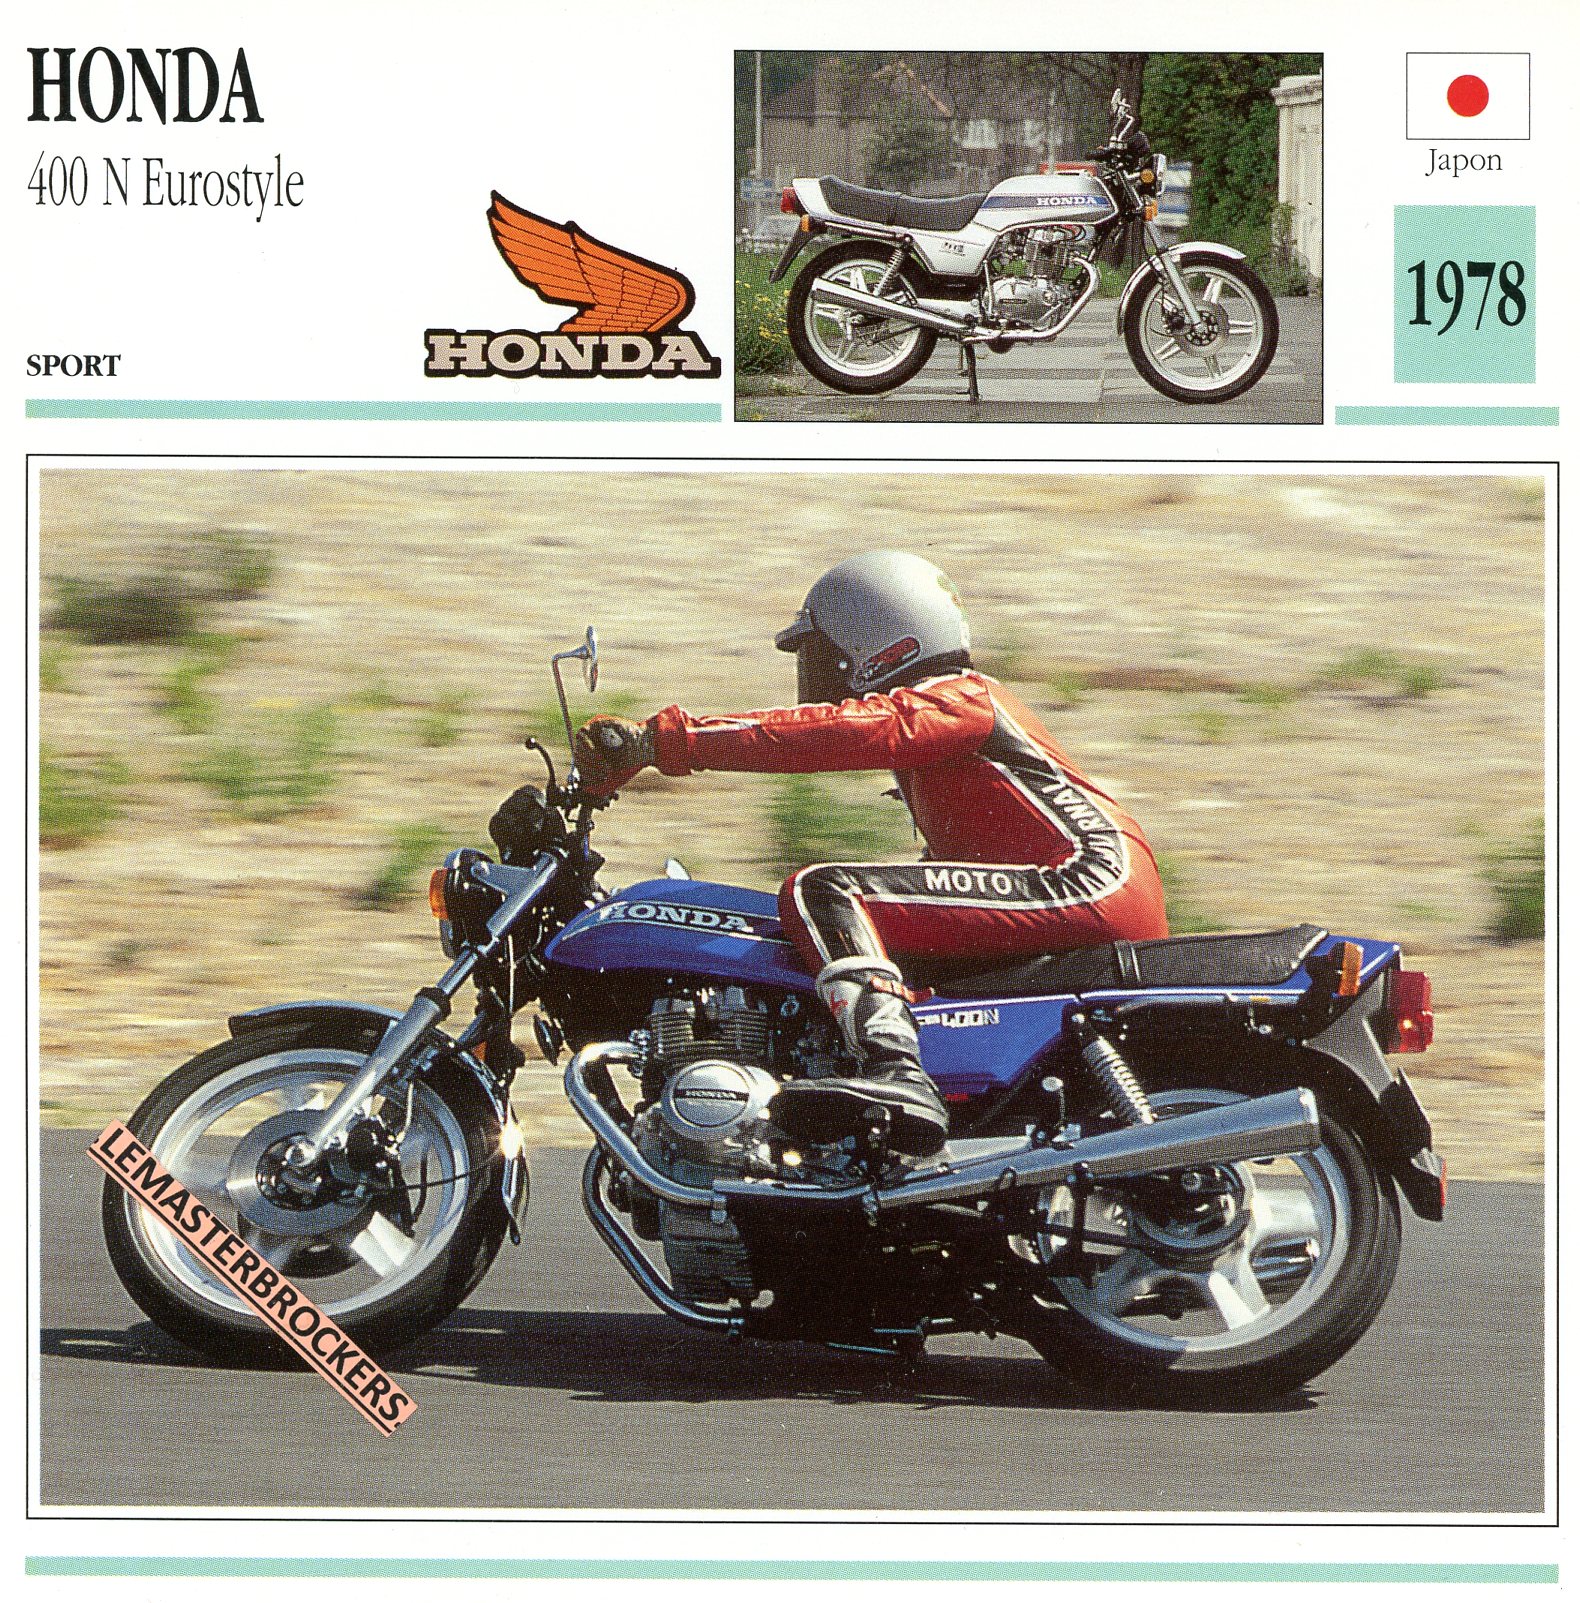 FICHE-MOTO-HONDA-400-EUROSTYLE-400N-1978-LEMASTERBROCKERS-CARS-MOTORCYCLE